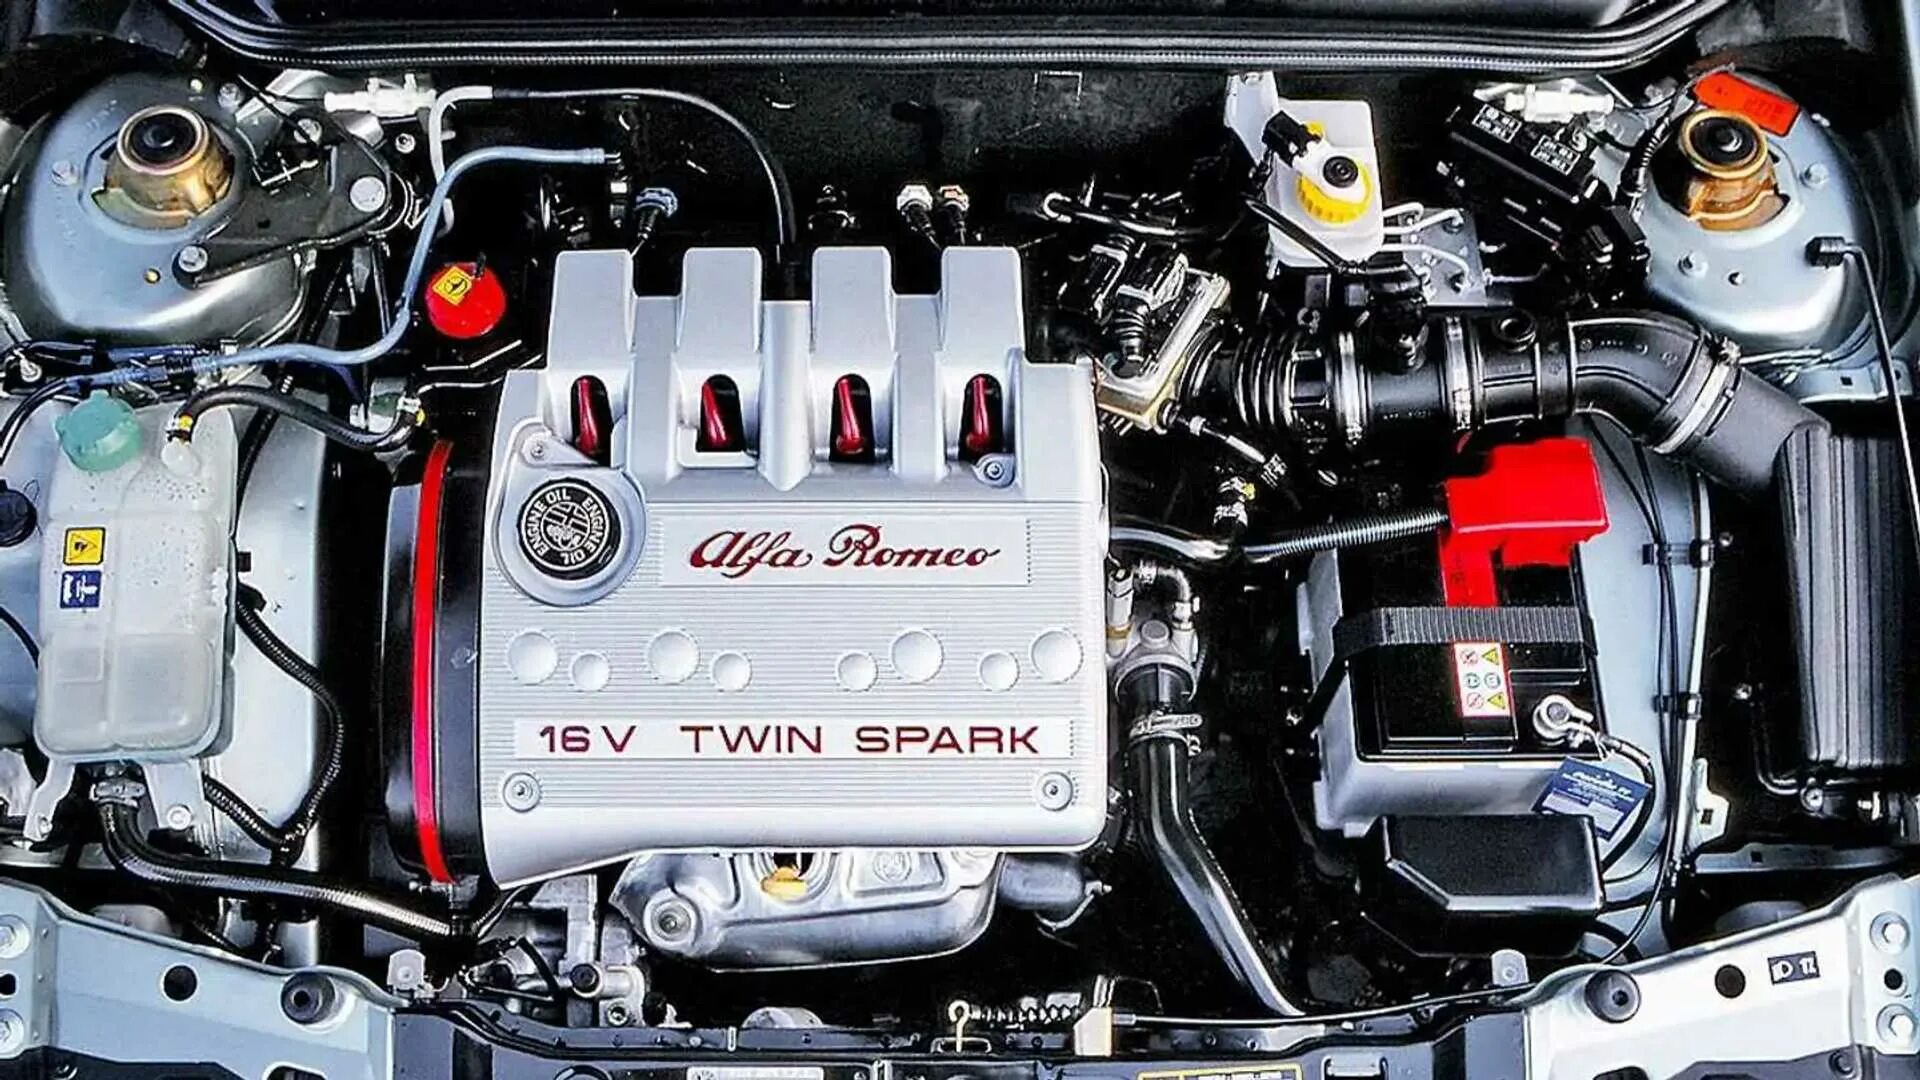 1.6 альфа ромео. Alfa Romeo Twin Spark 16v. Альфа Ромео 156 1.6 Твин Спарк. Двигатель Твин Спарк Альфа Ромео. Двигатель Альфа Ромео 156 2.0.